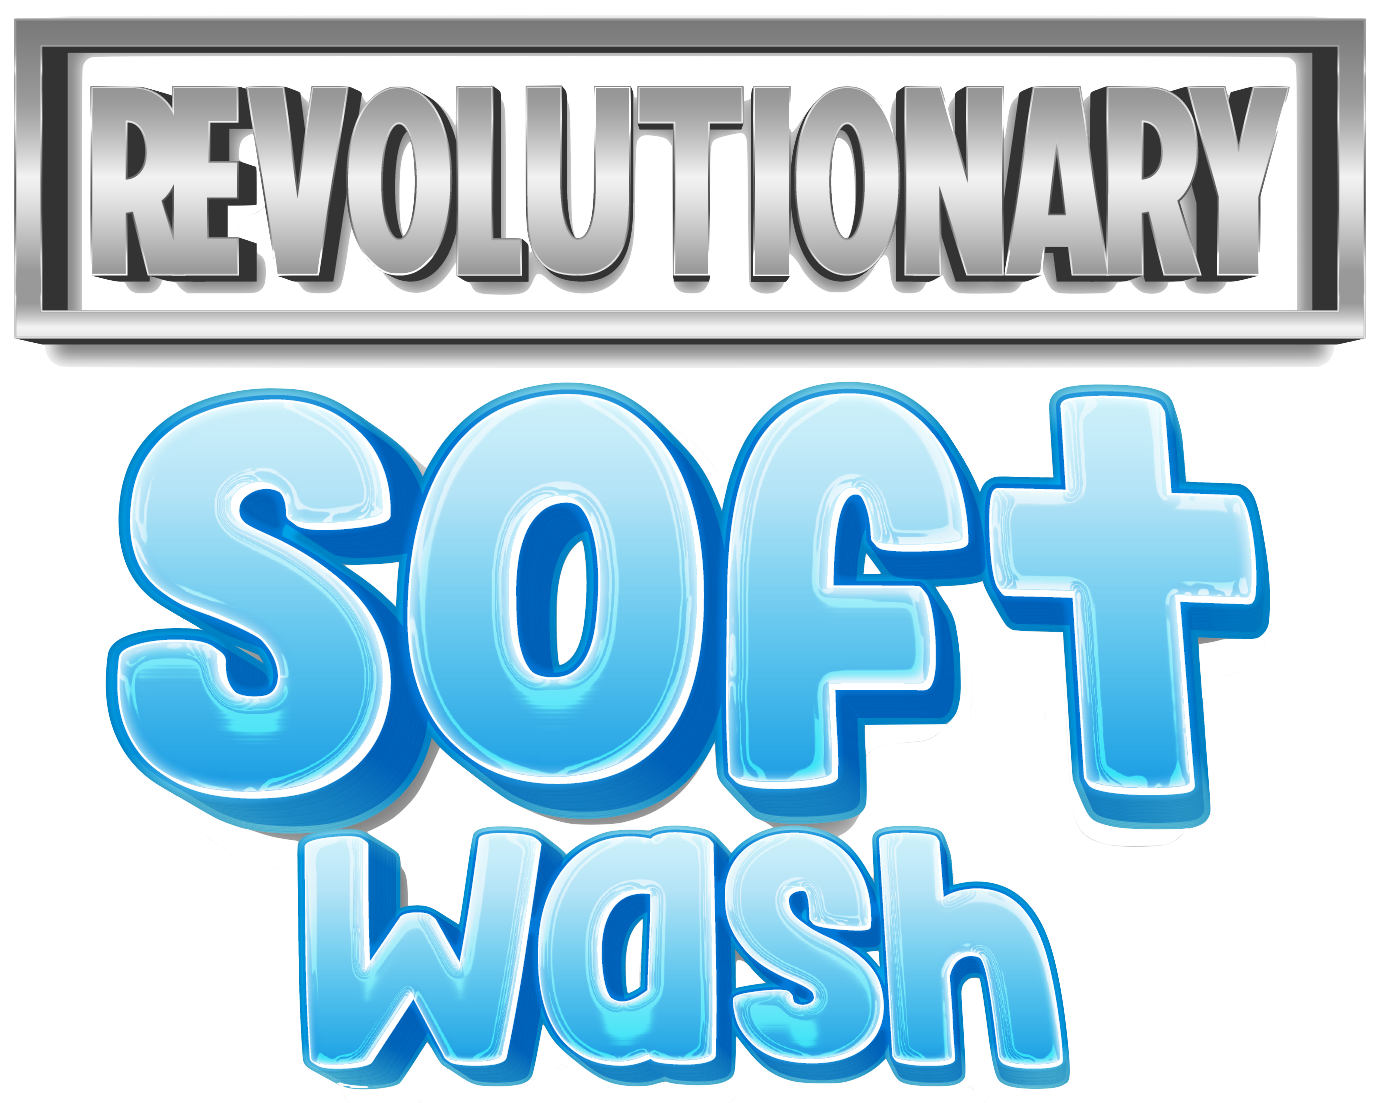 Revolutionary Soft Wash